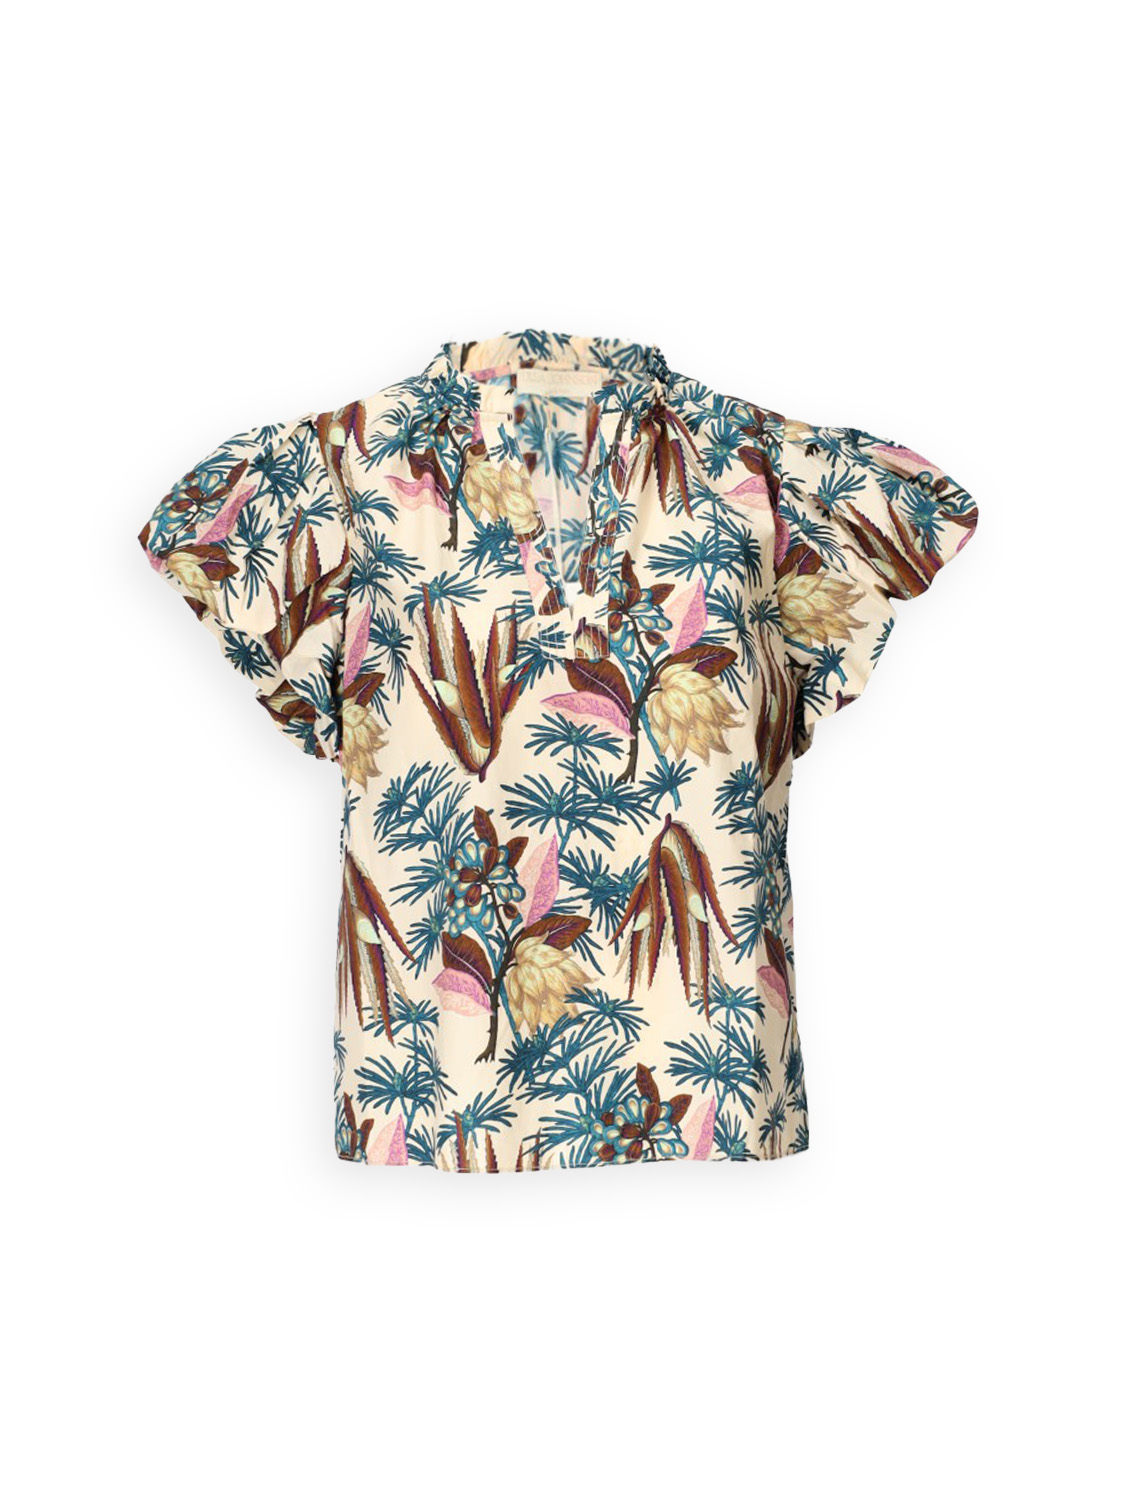 Kiara - Cotton poplin blouse with floral print 